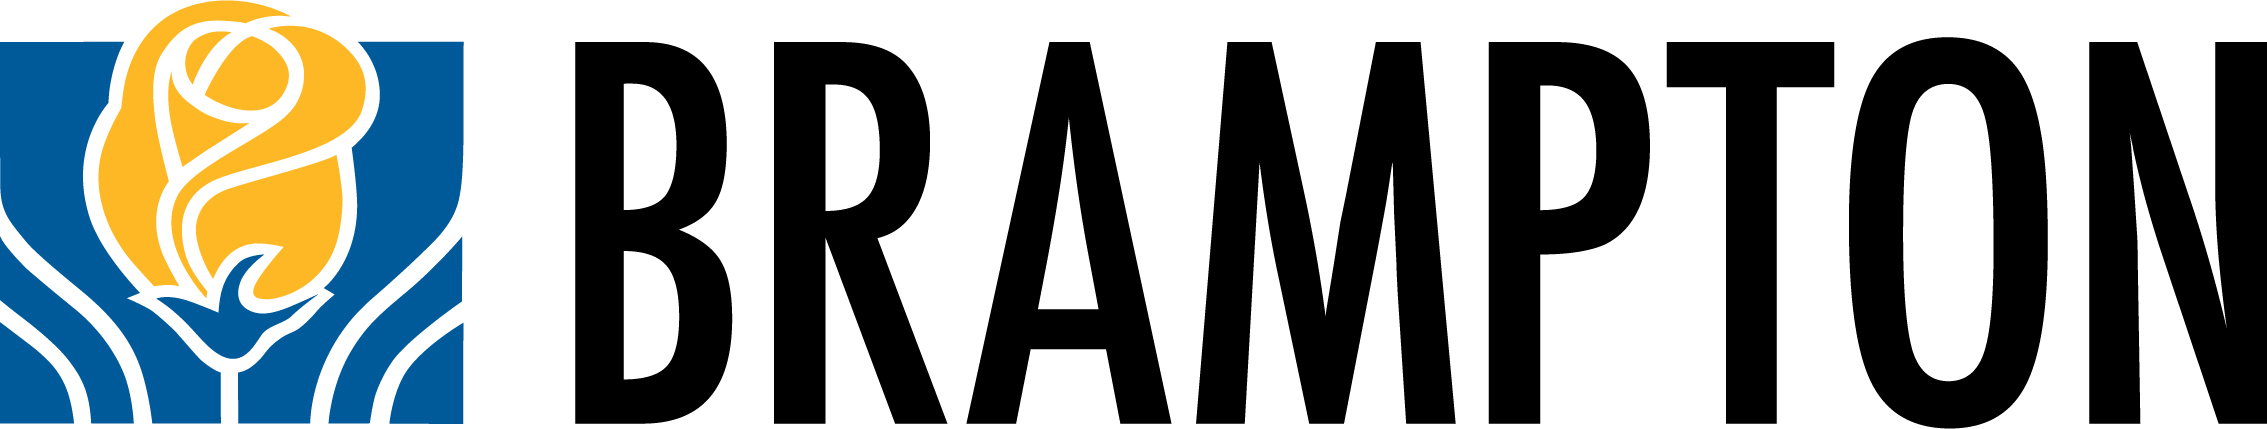 Logo Image for City of Brampton